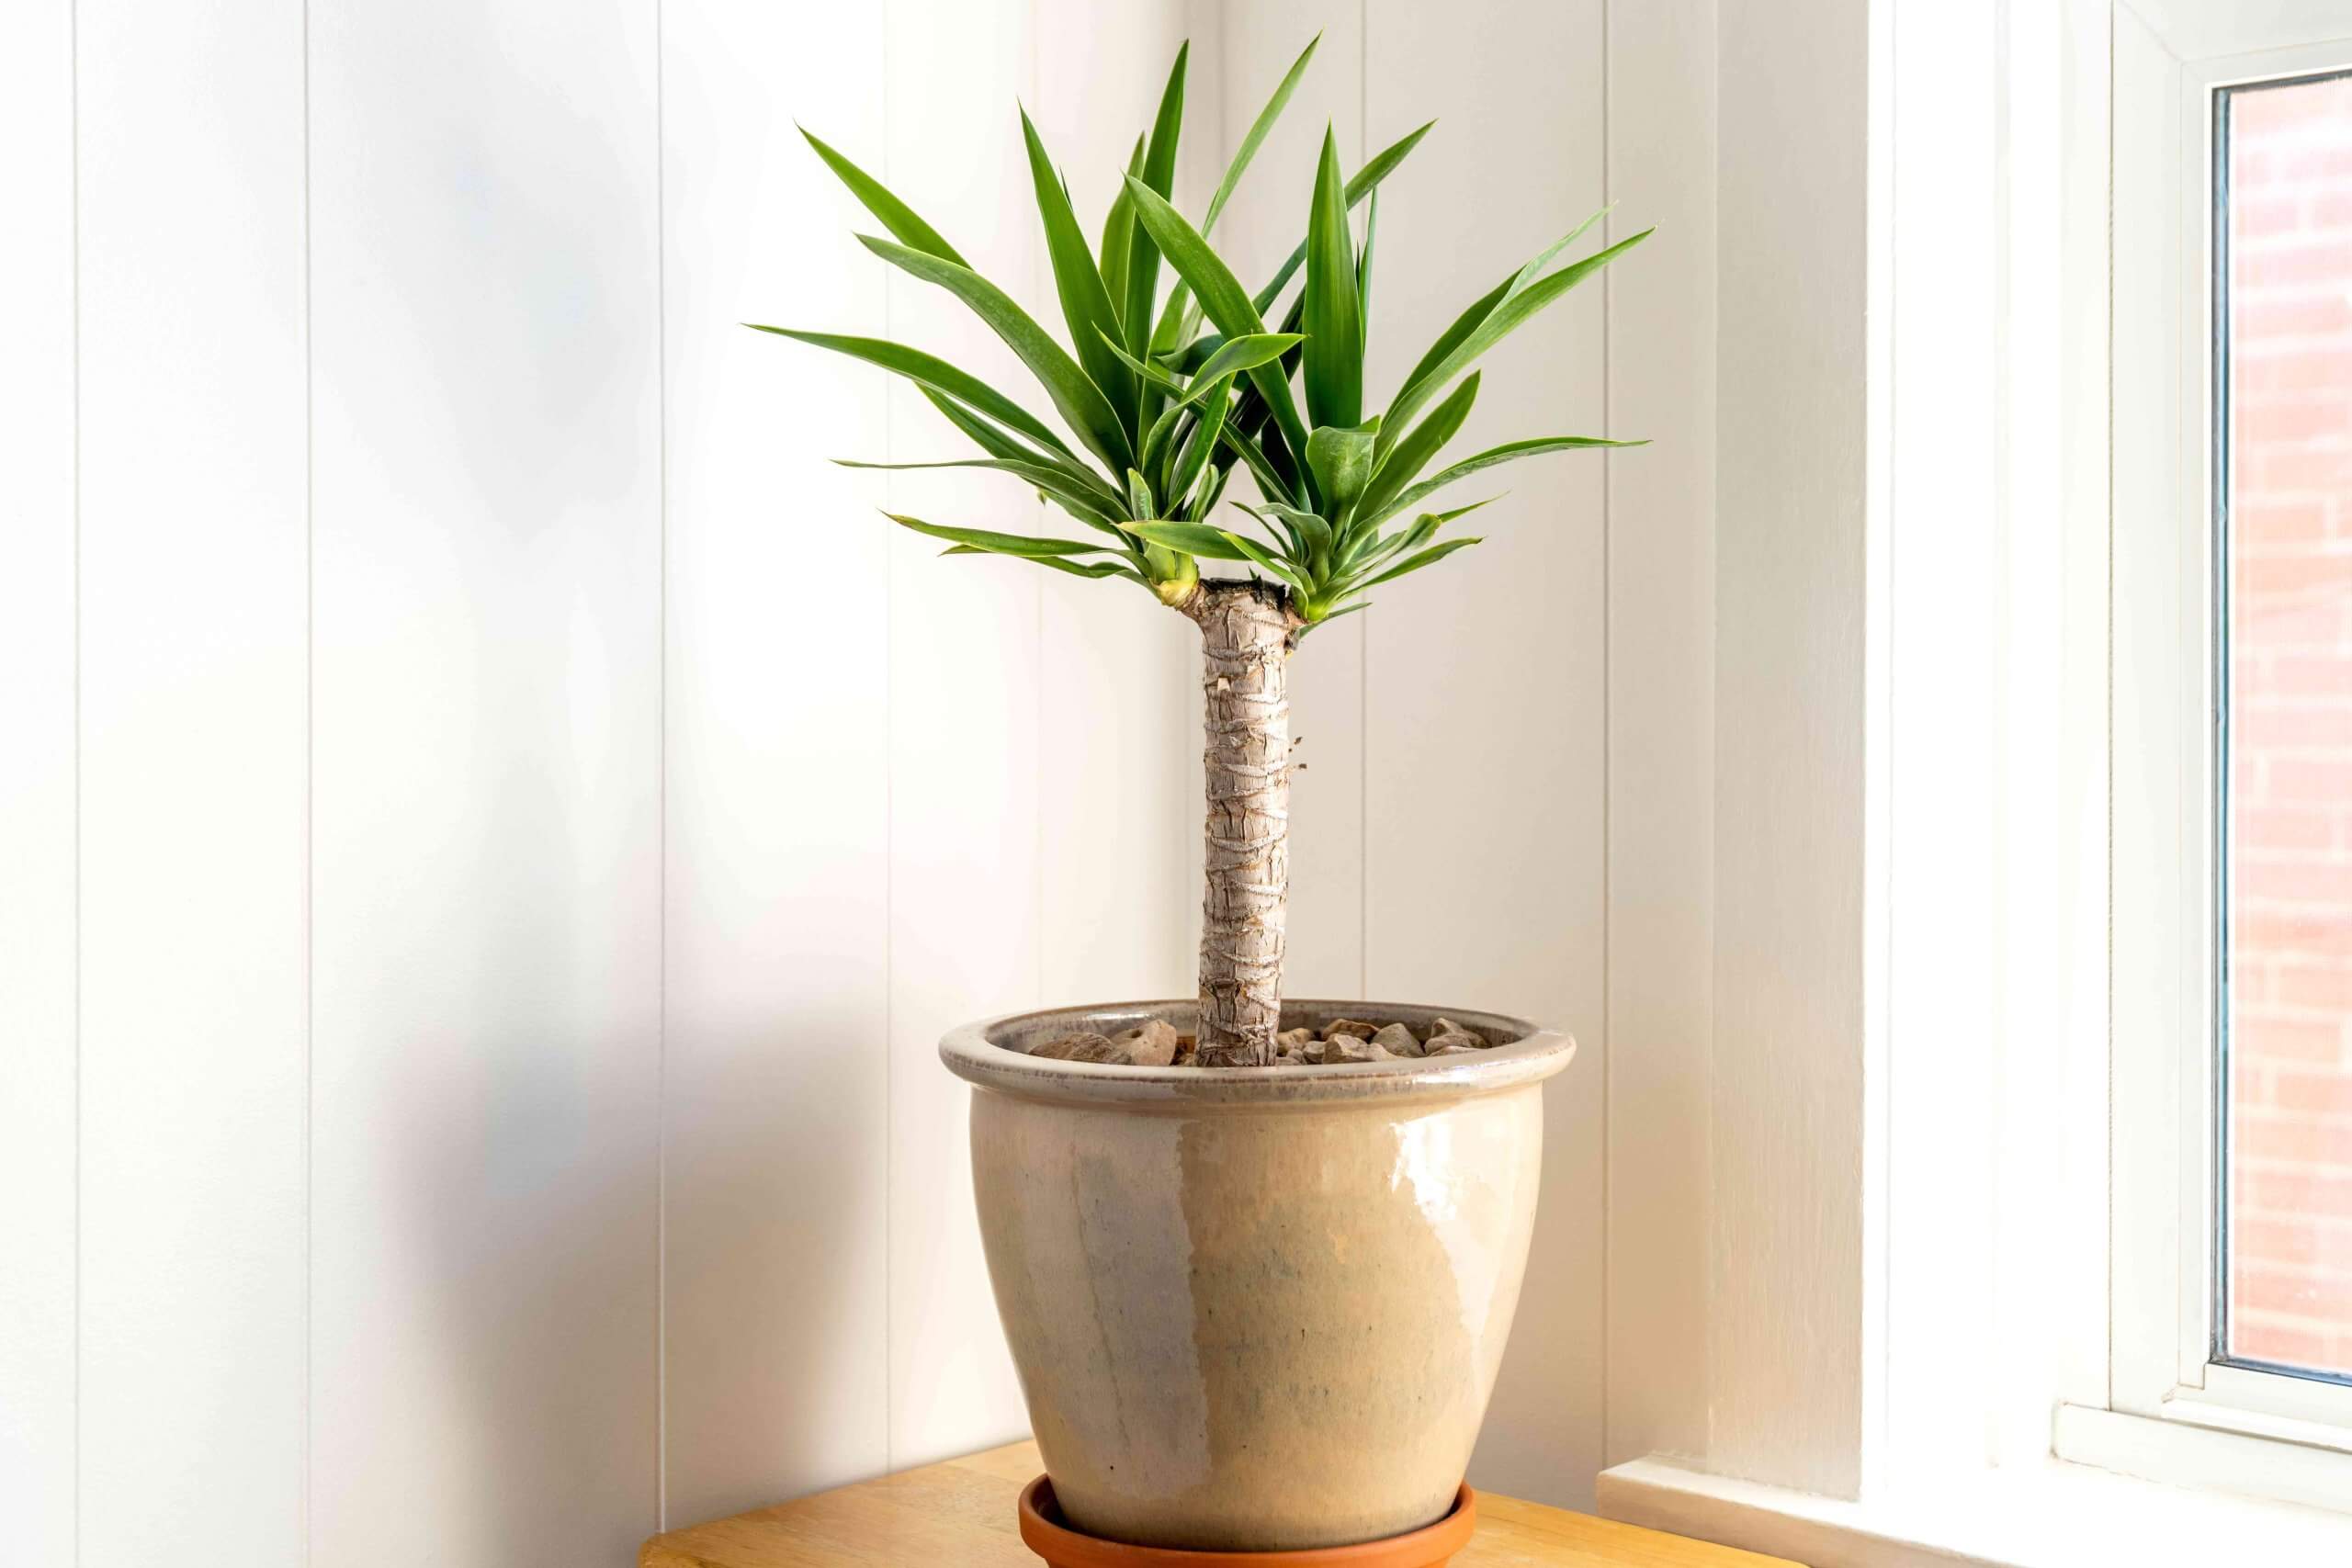 Spineless Yucca plant in pot on shelf near window